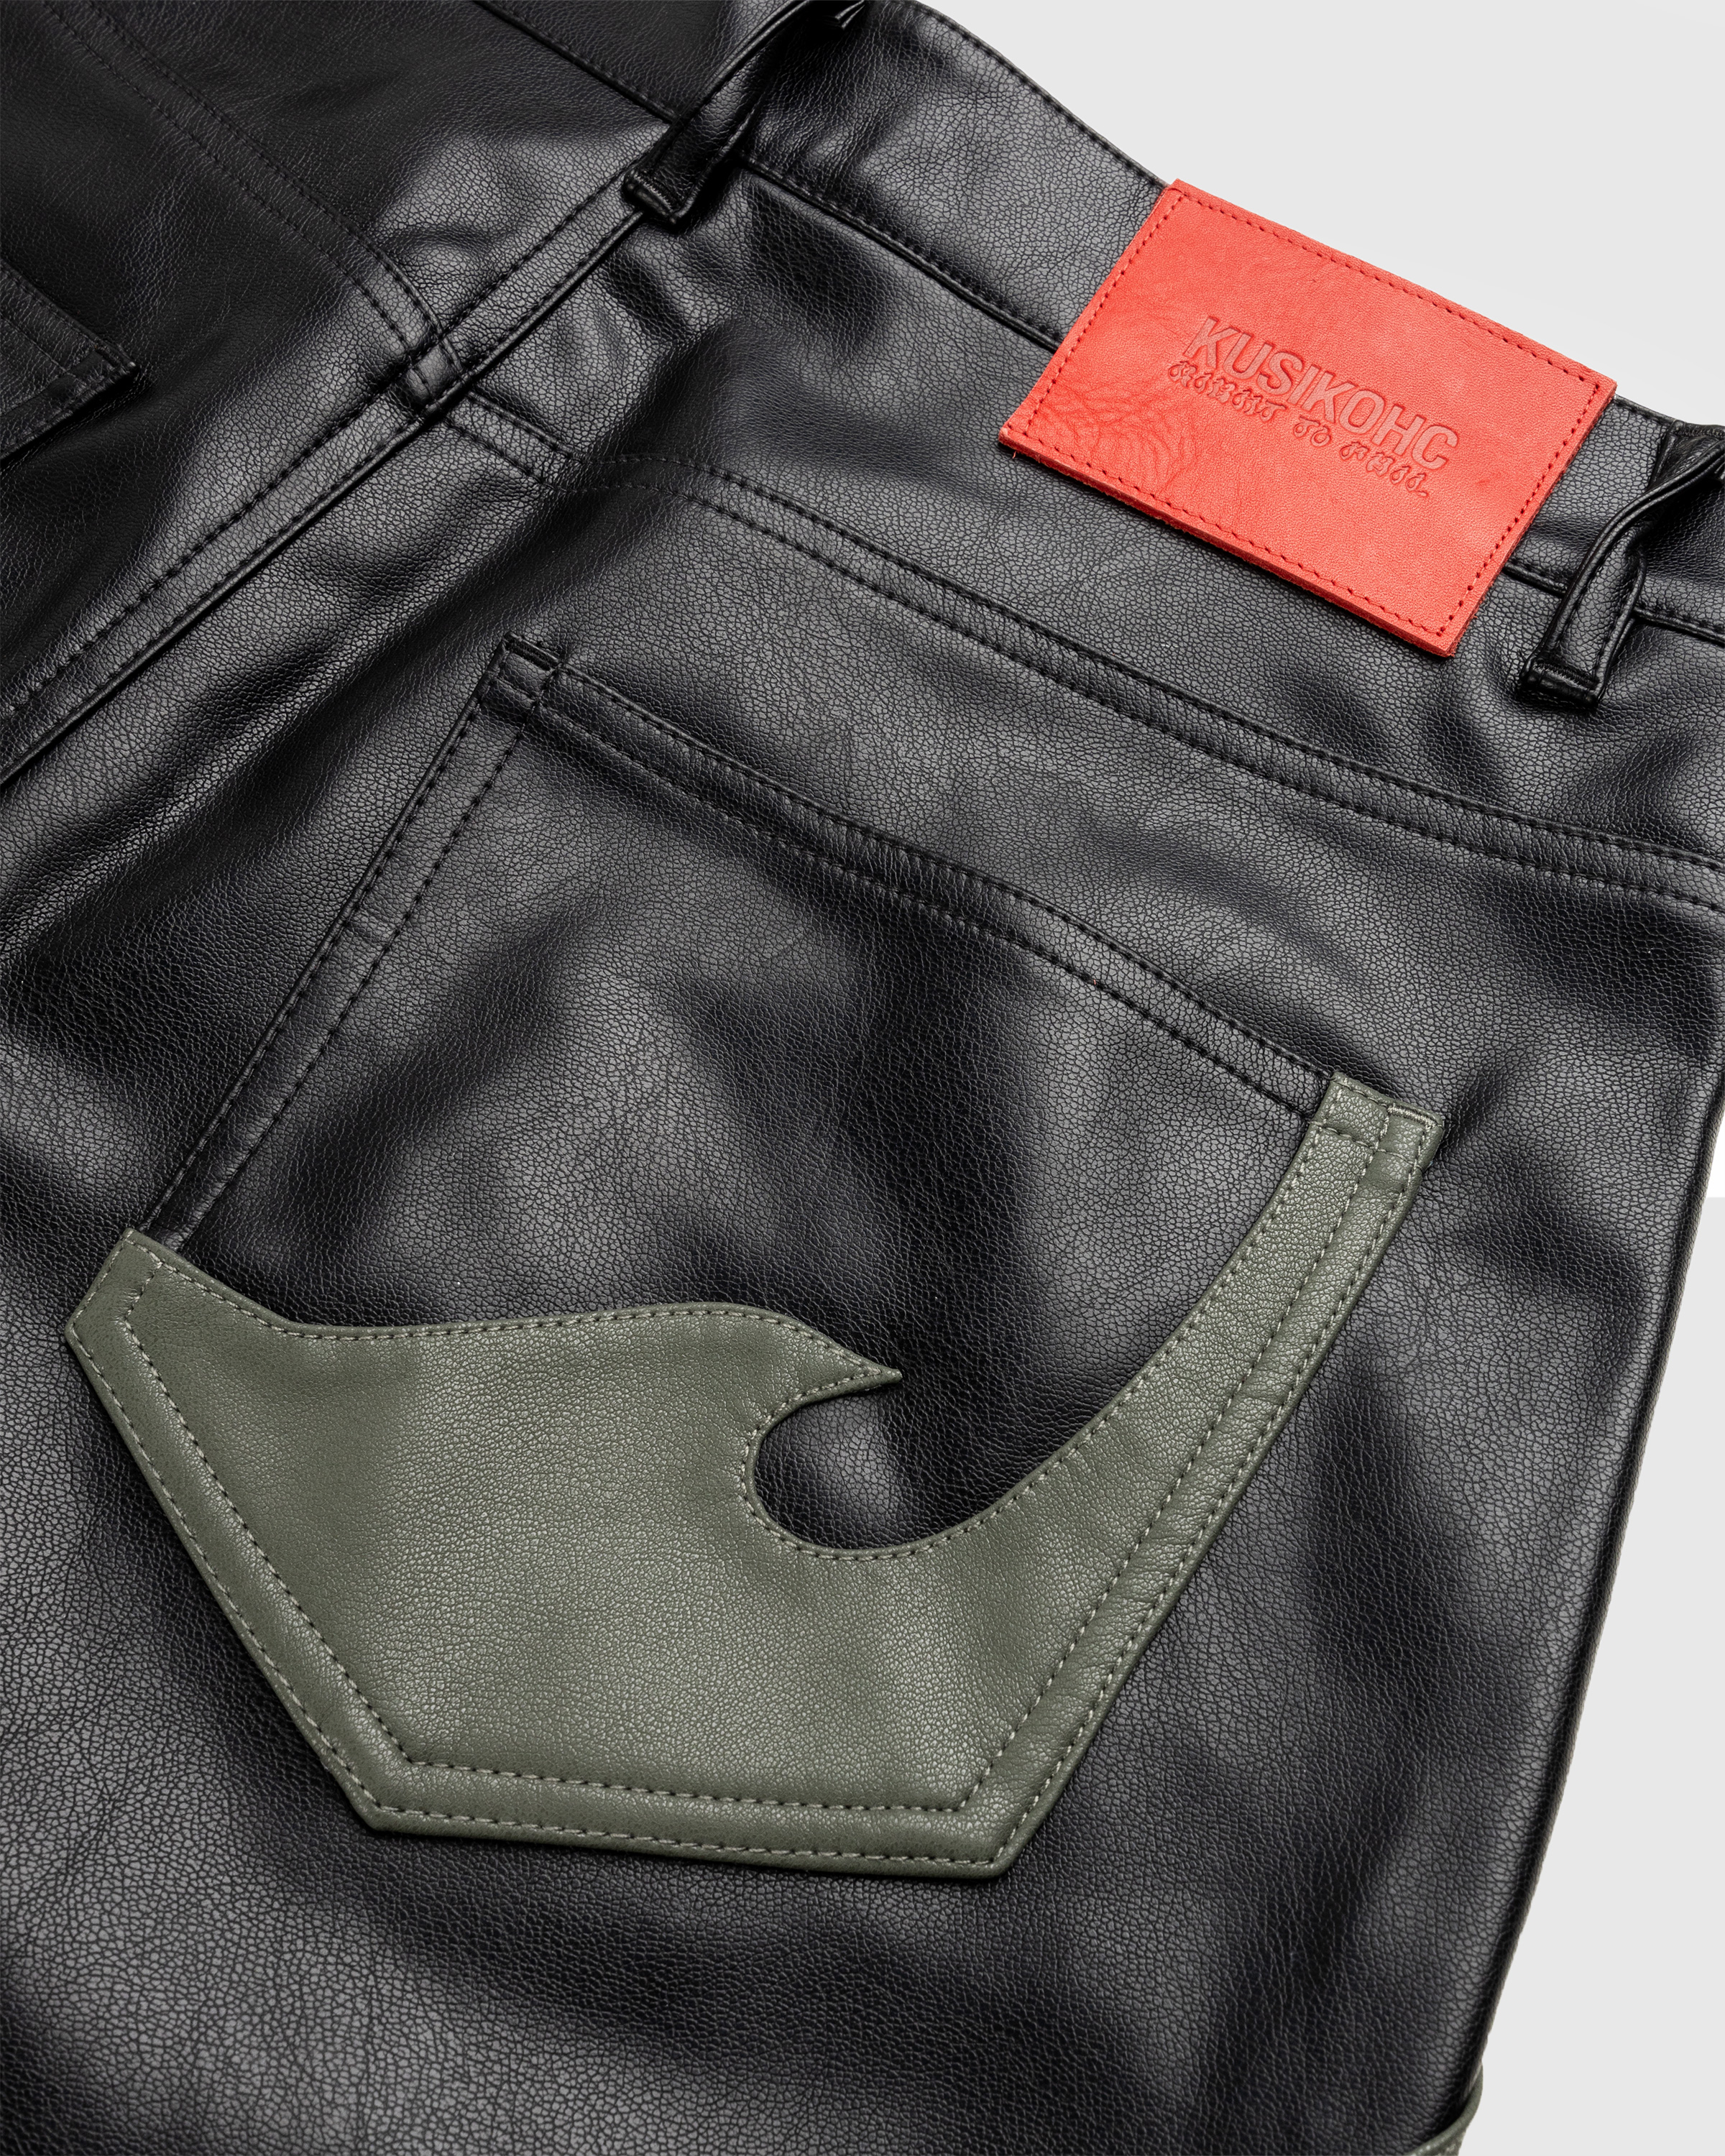 KUSIKOHC – Burn Detail Faux Leather Shorts Black - Shorts - Black - Image 8